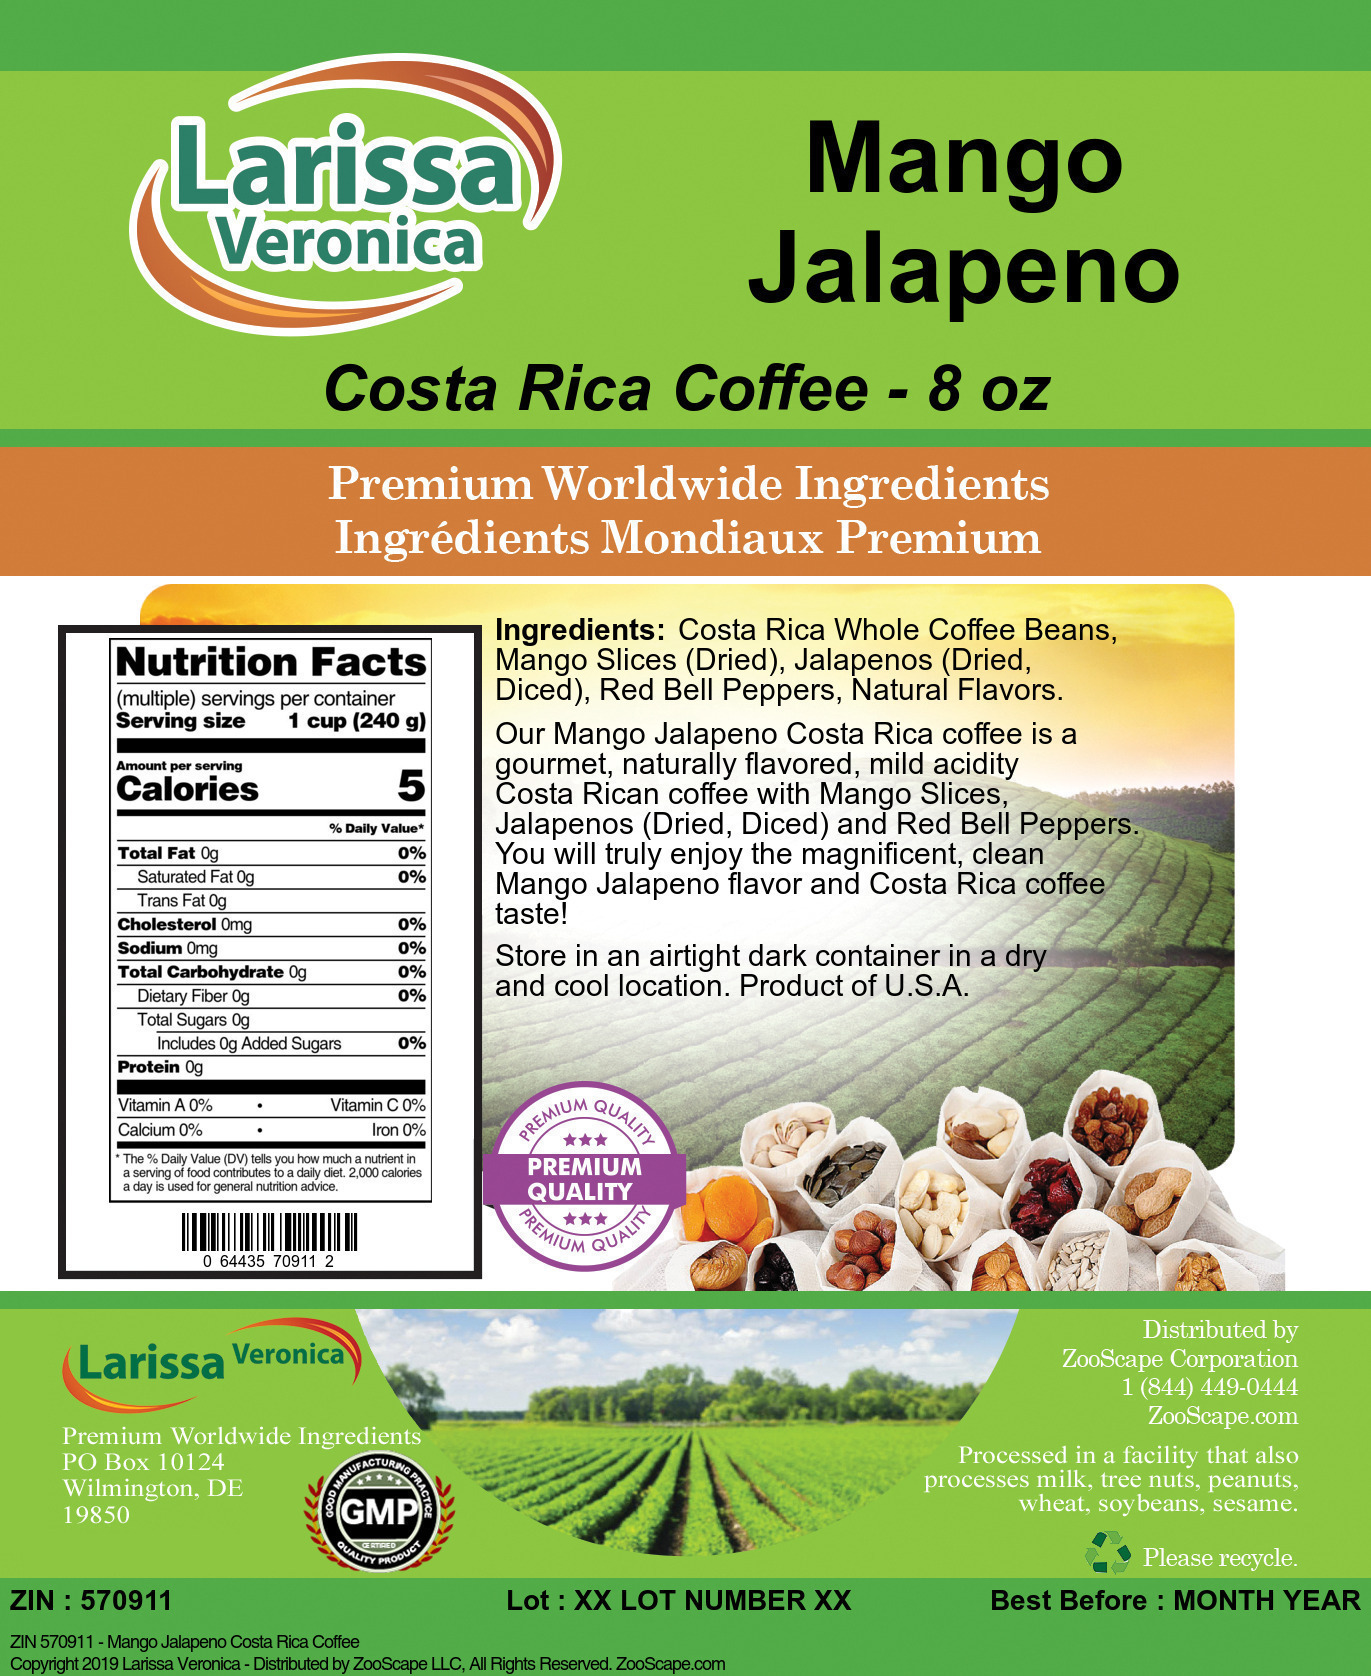 Mango Jalapeno Costa Rica Coffee - Label